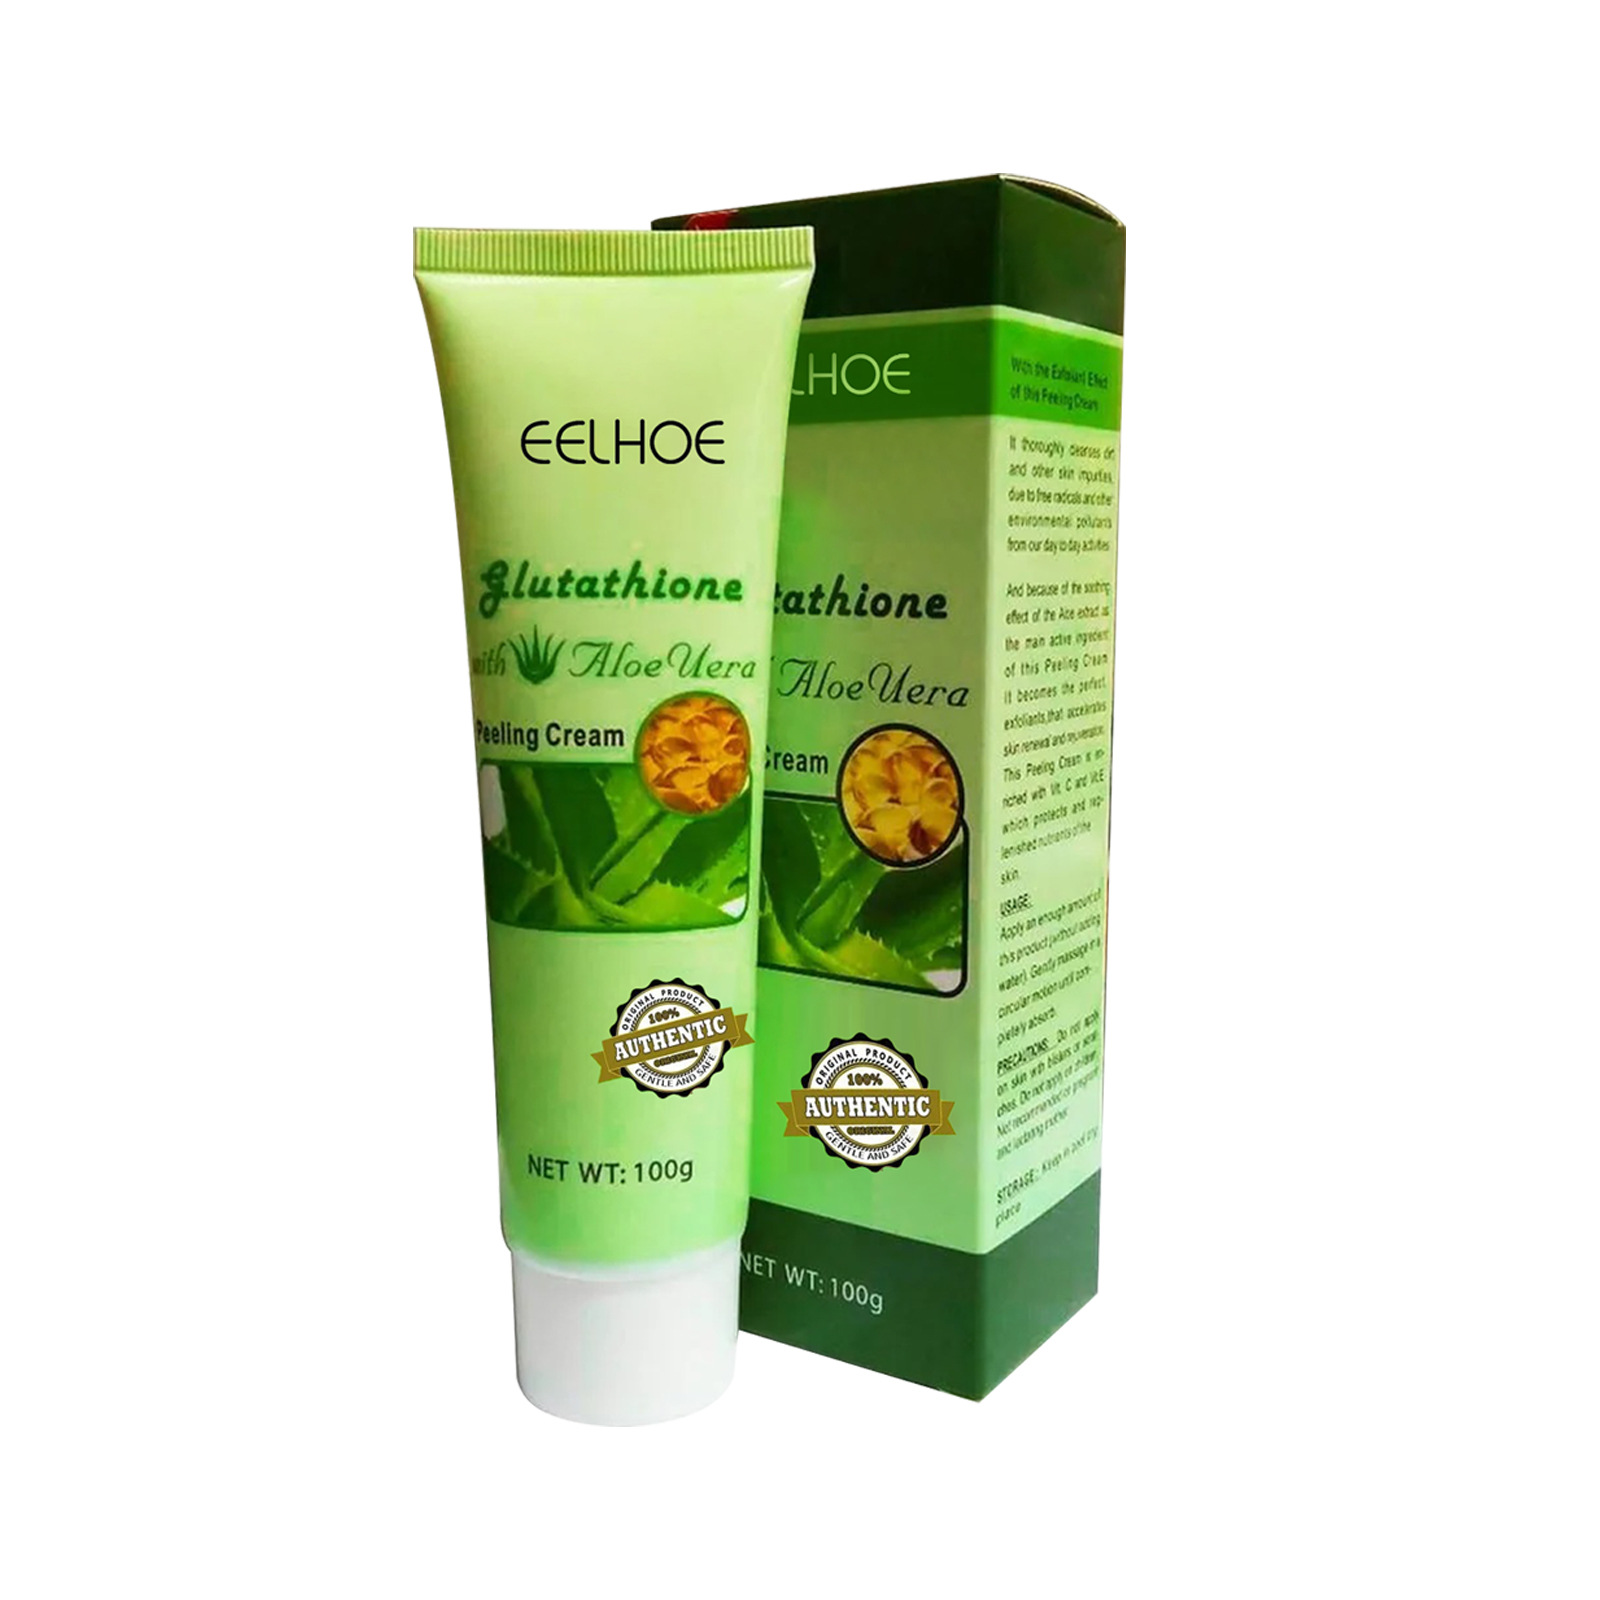 Eelhoe Aloe Repair Exfoliating Cream Mild Cleansing, Hydrating and Moisturizing Facial Skin Smooth Skin Repair Cream